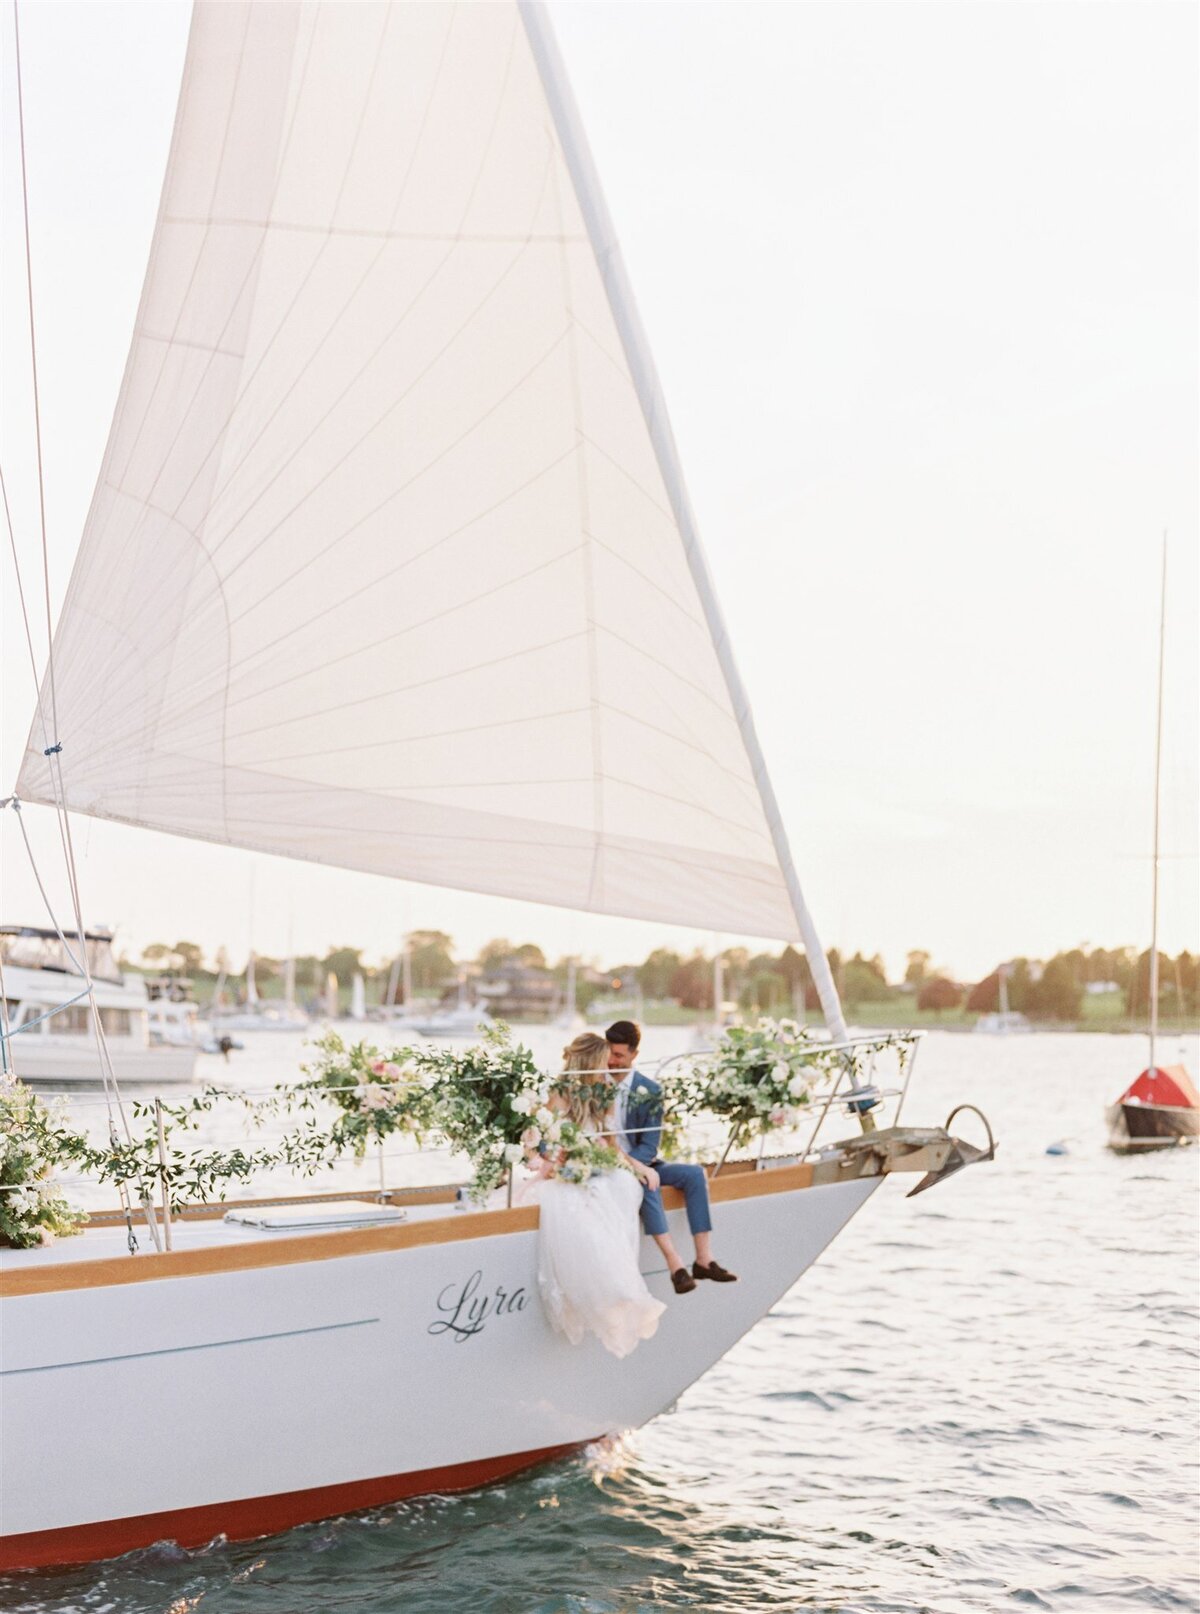 Kate-Murtaugh-Events-wedding-planner-Newport-sailboat-romantic-elopement-Atlantic-Ocean-yacht